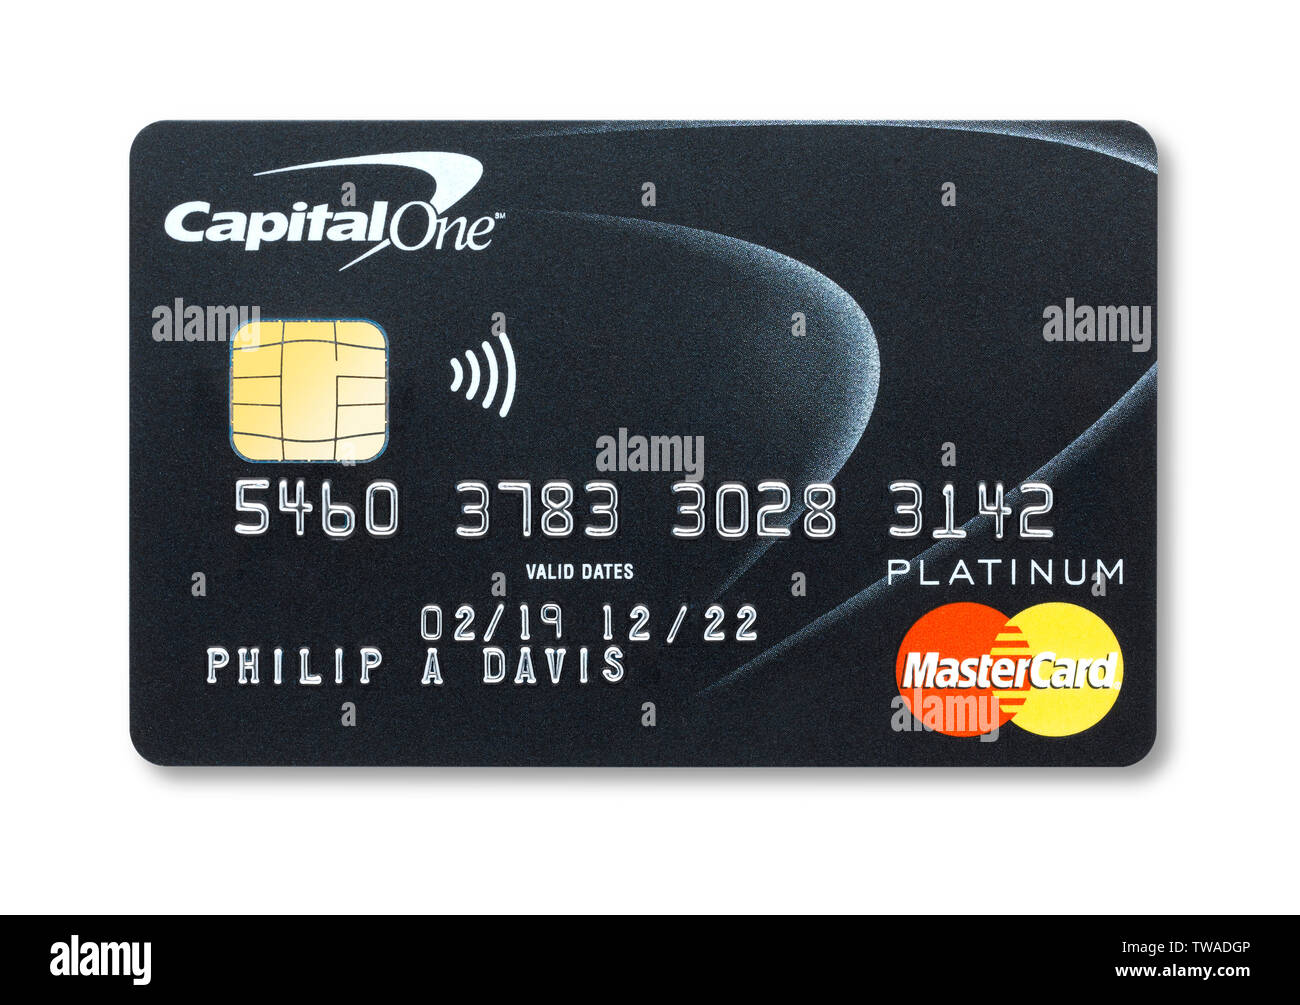 Tarjeta de crédito Capital One Mastercard Foto de stock